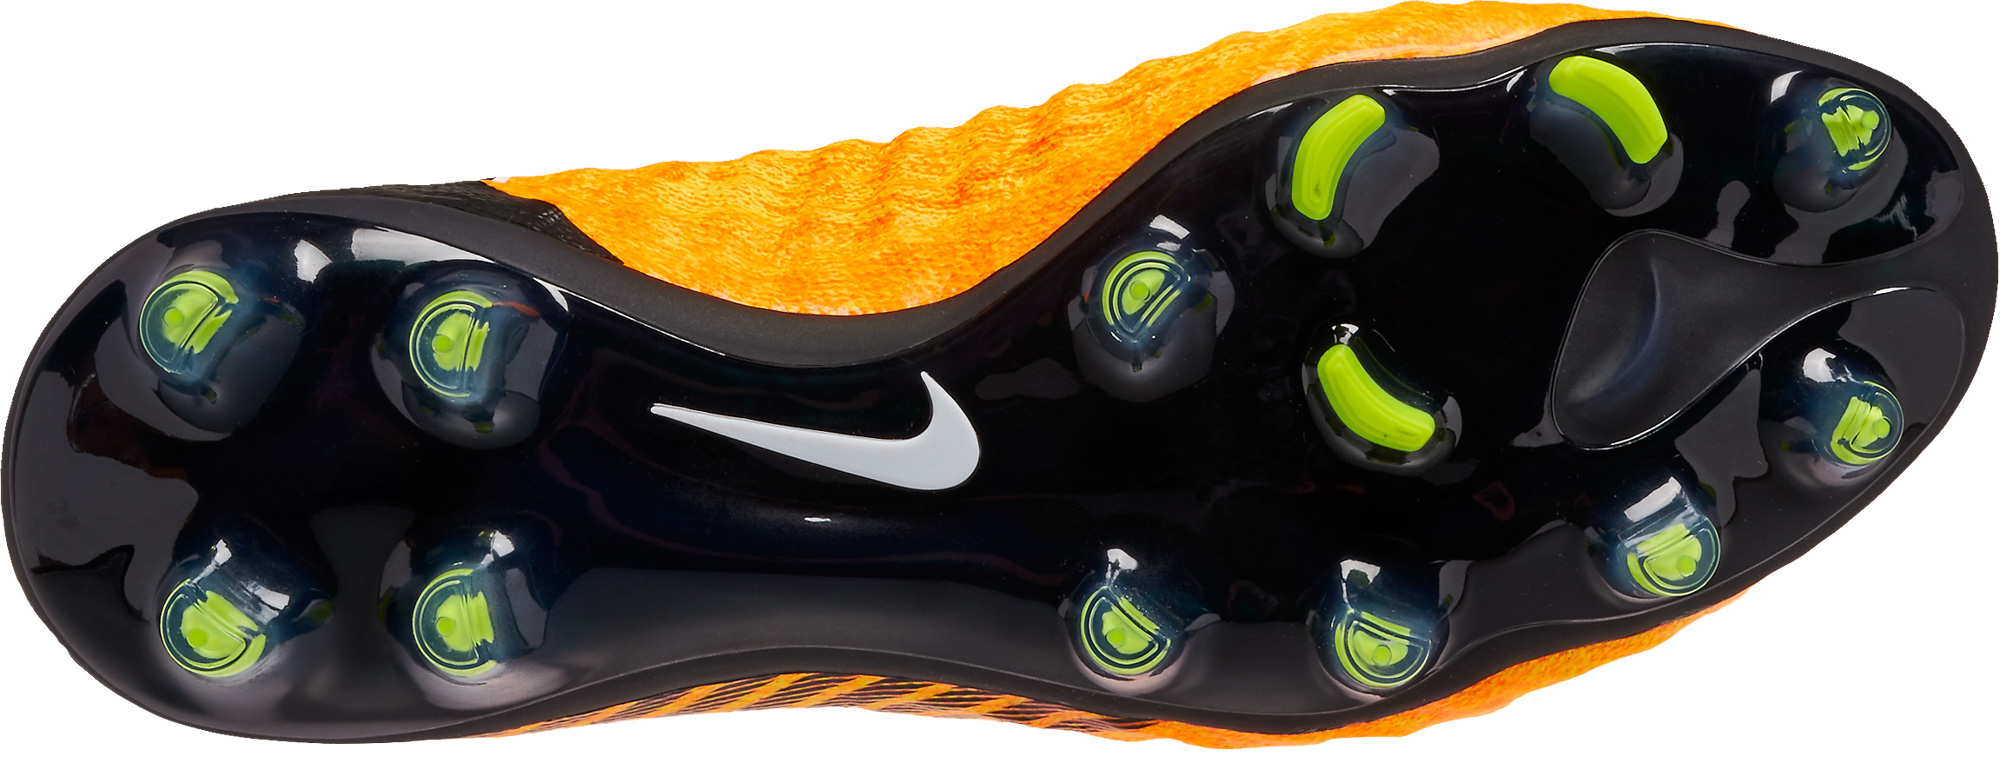 Nike Magista X TF Total Orange Black Hyper Punch